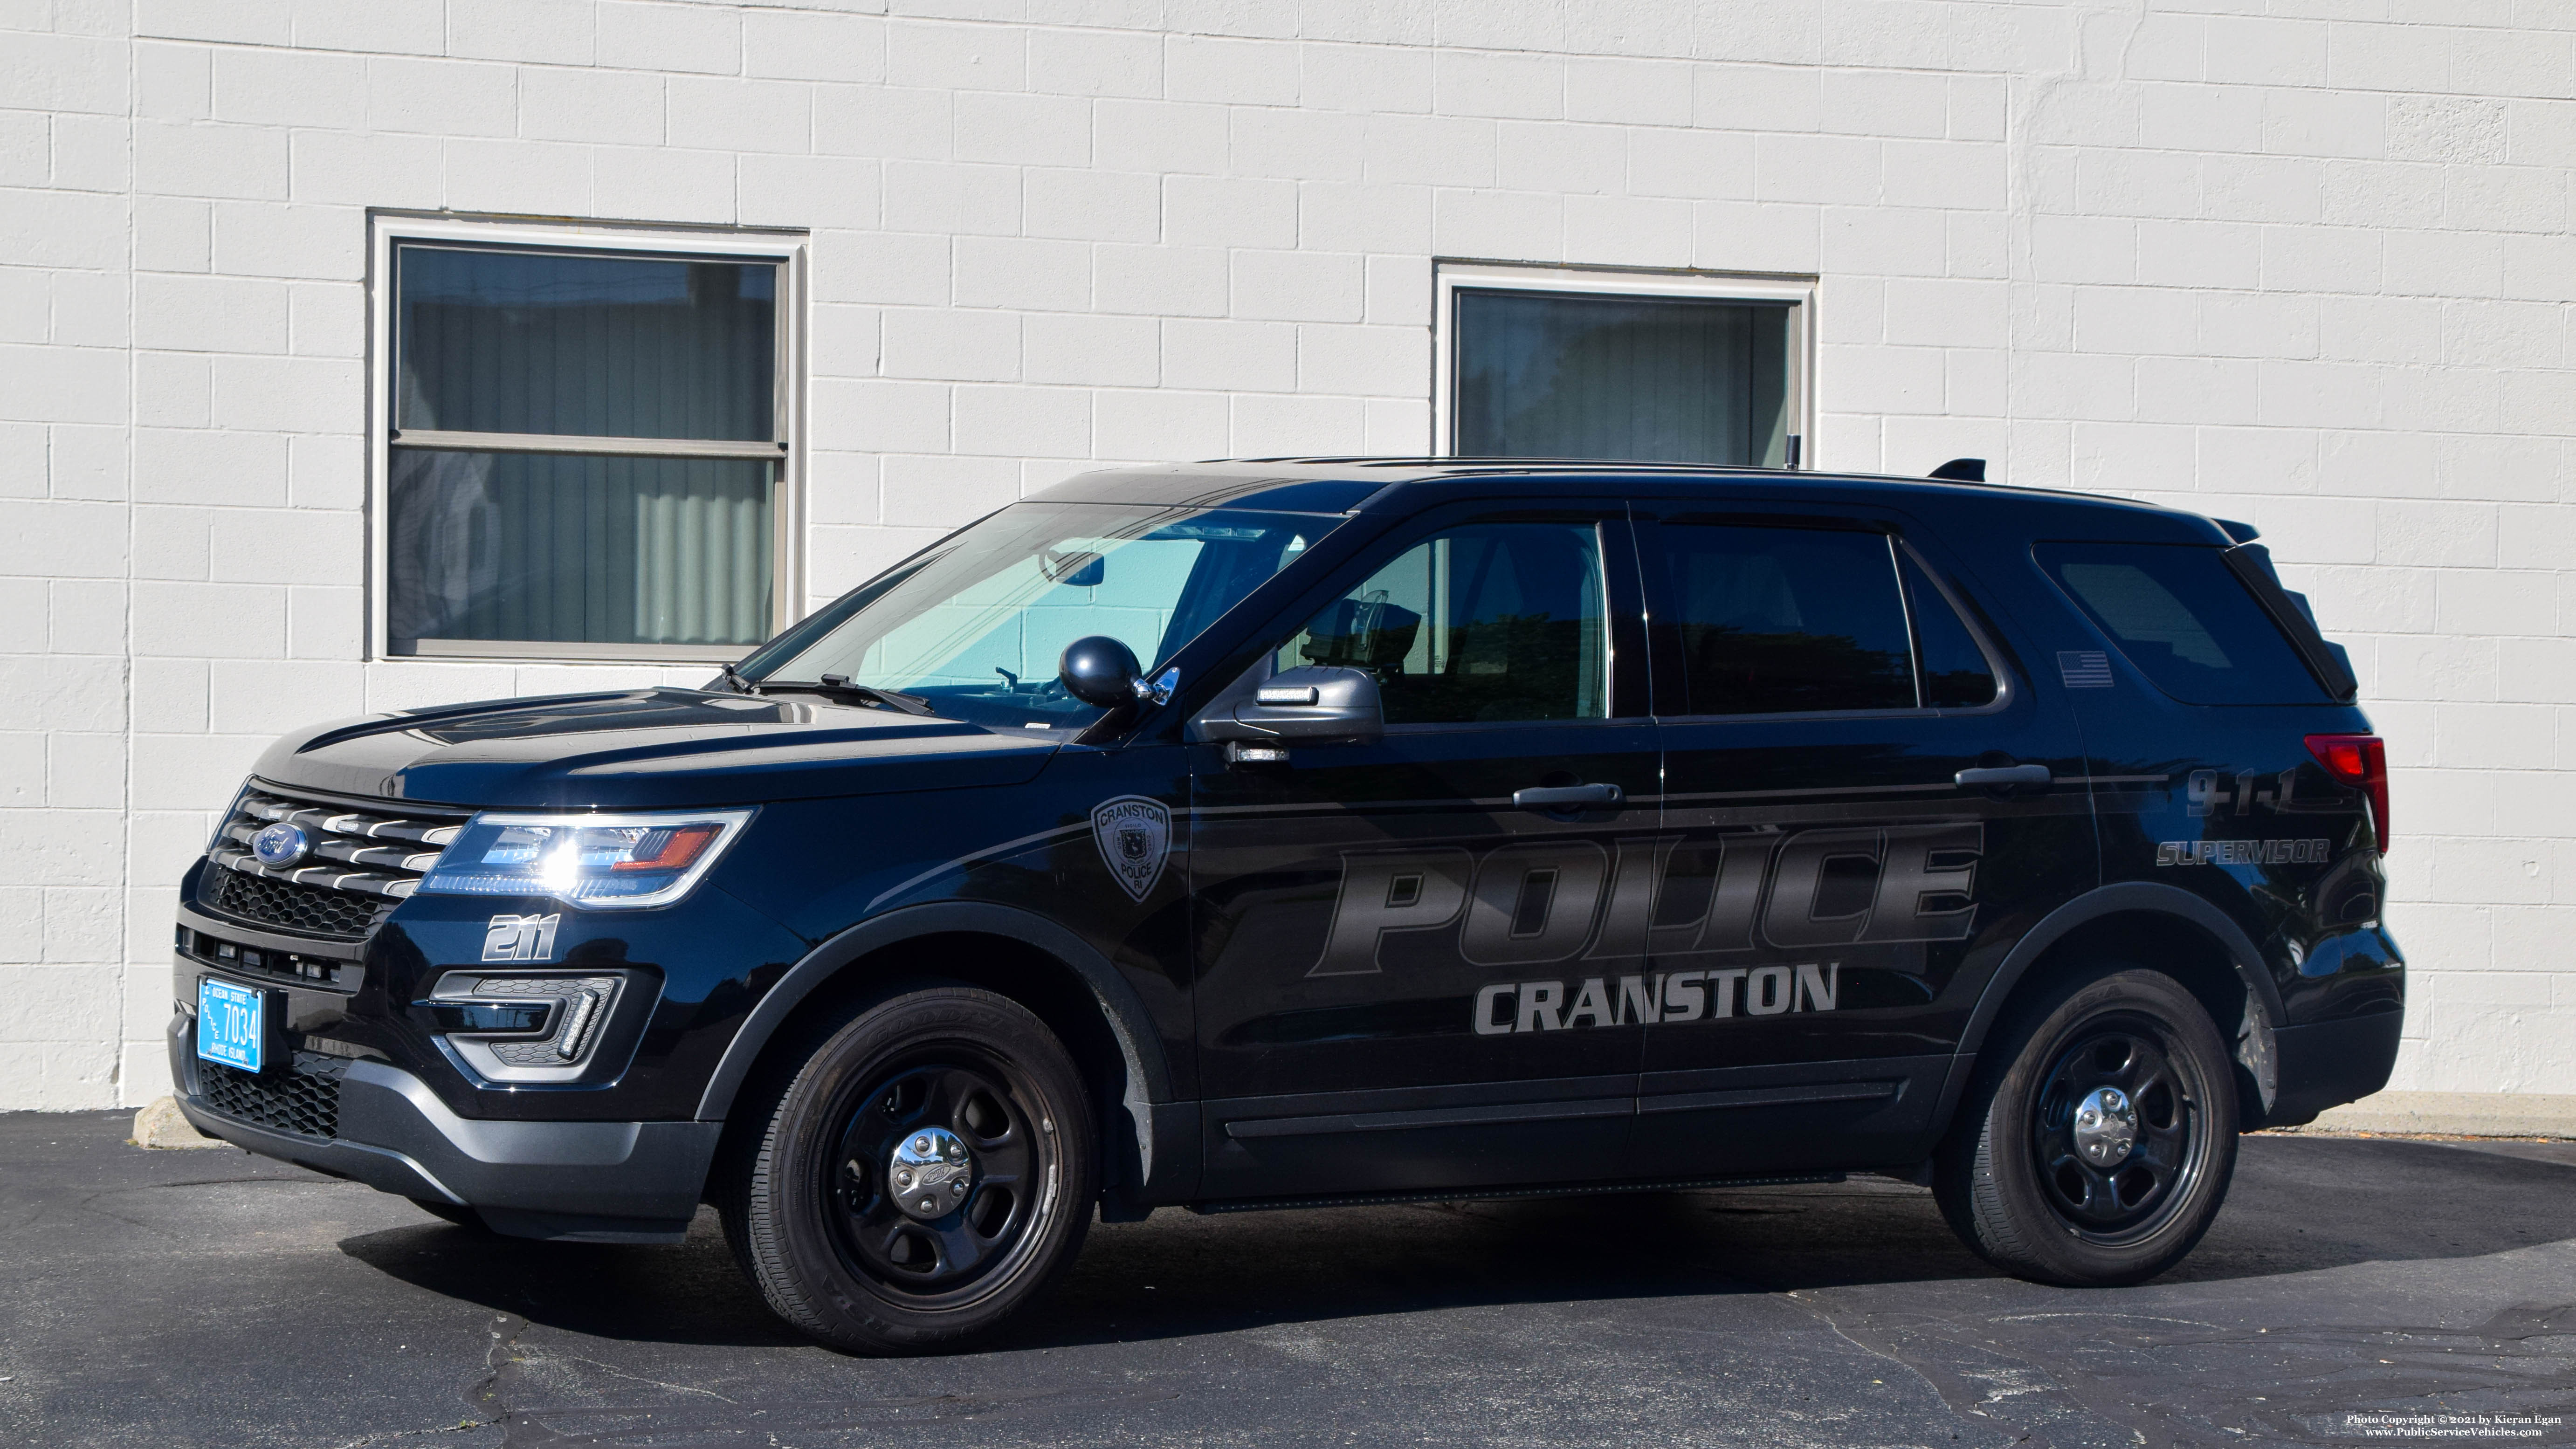 A photo  of Cranston Police
            Cruiser 211, a 2018 Ford Police Interceptor Utility             taken by Kieran Egan